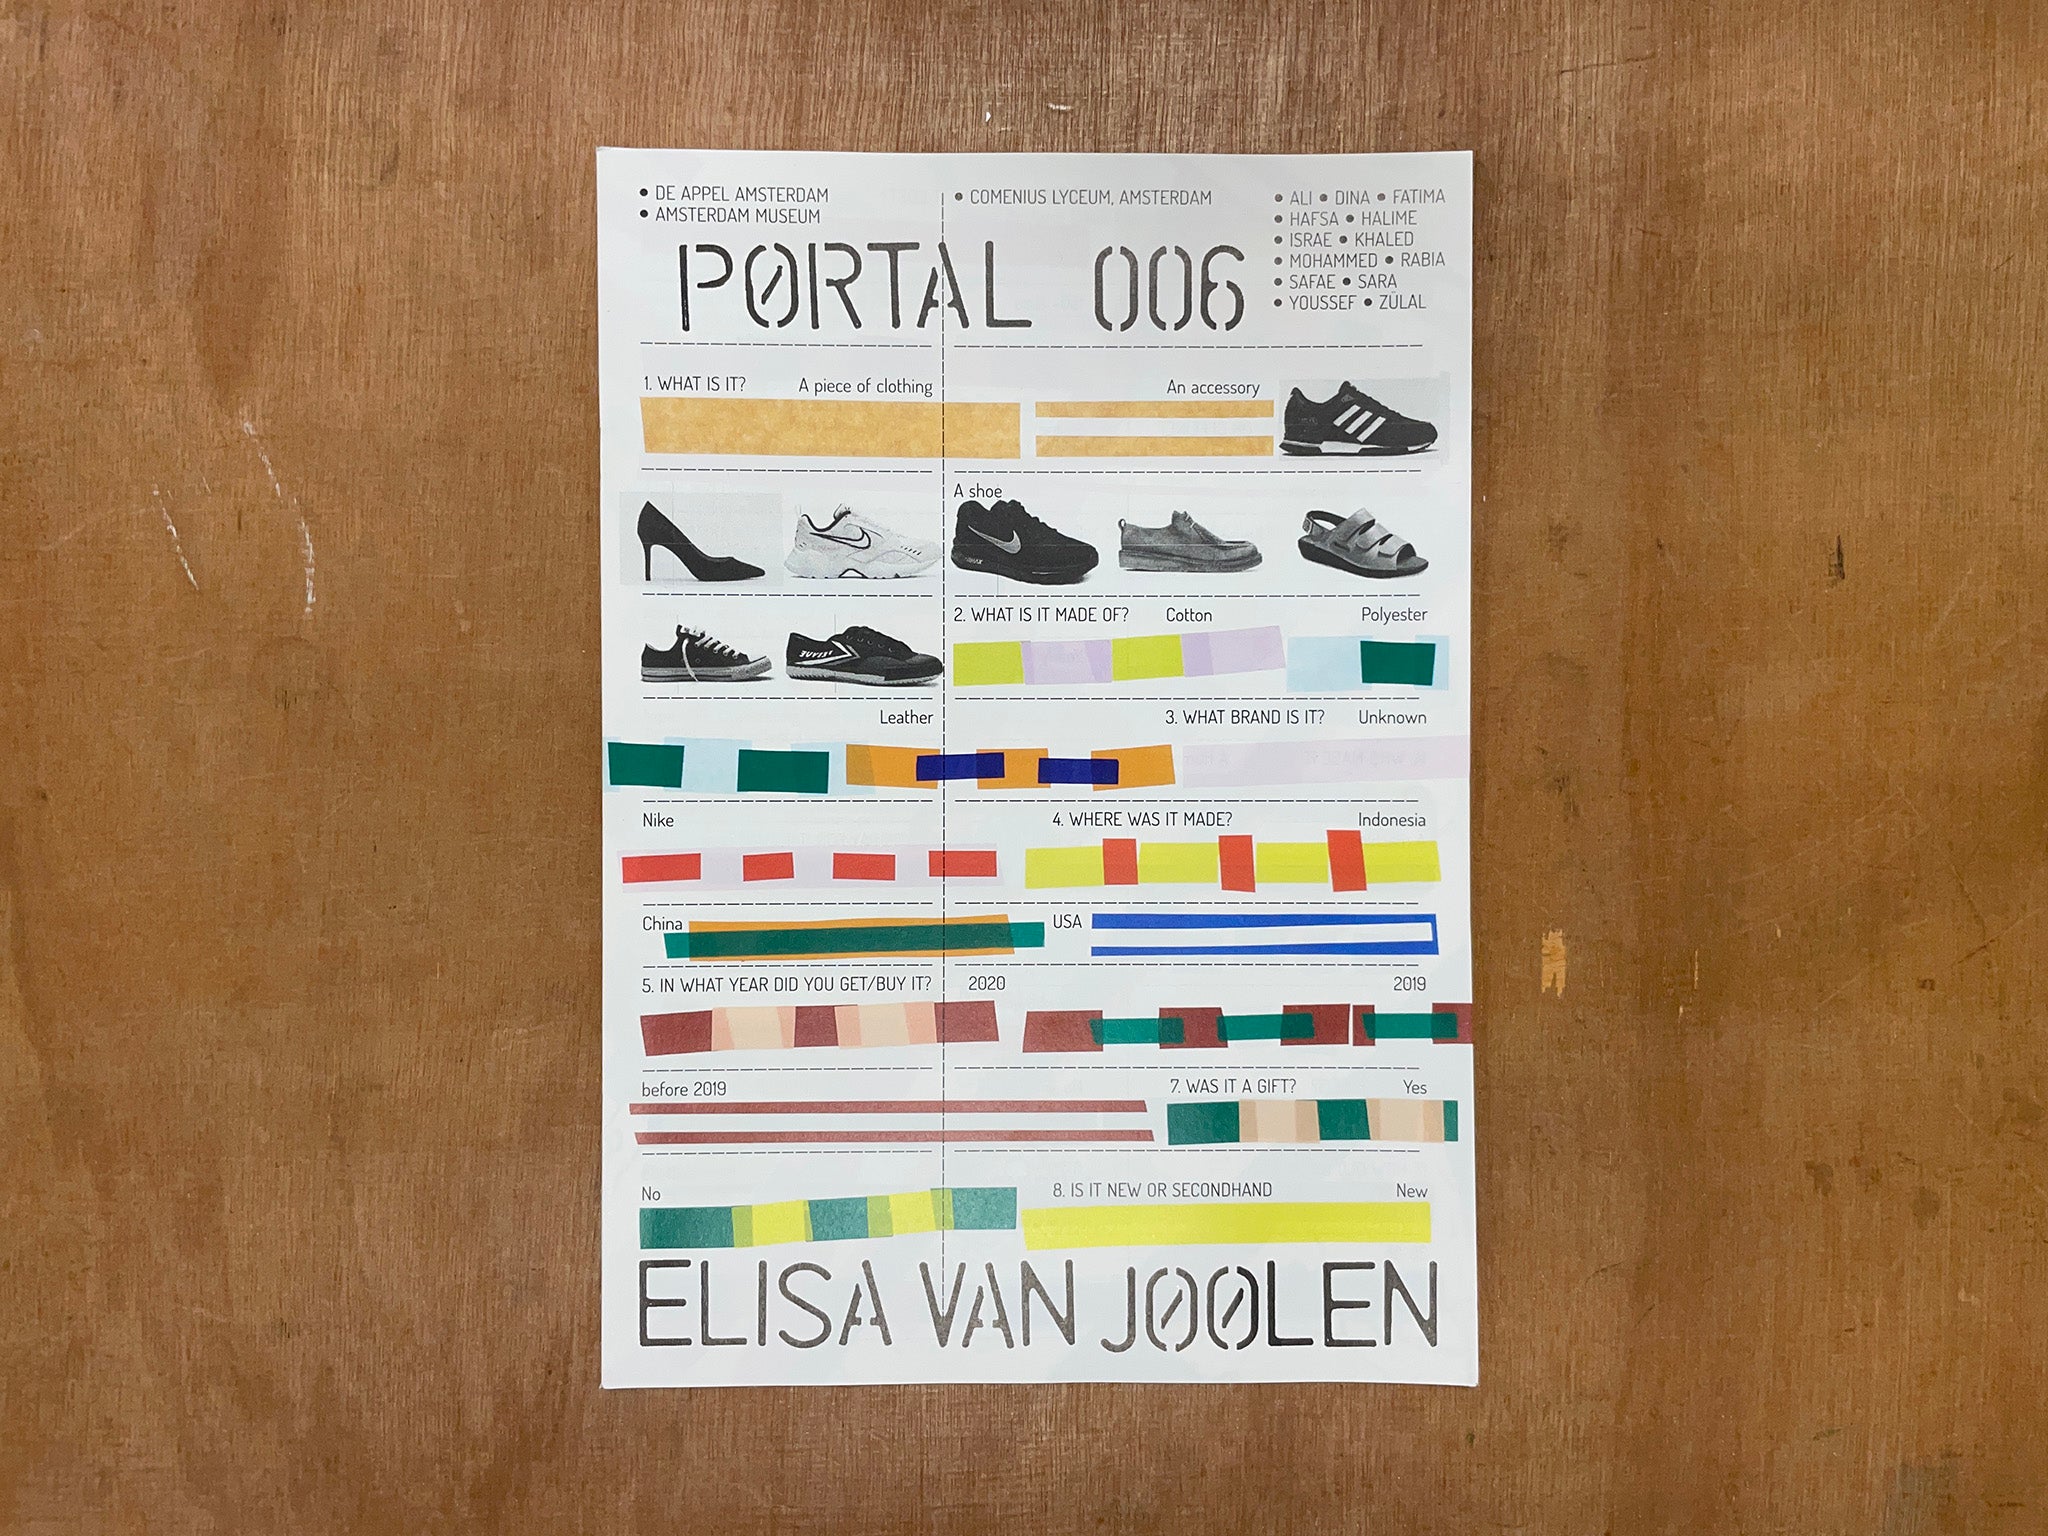 PORTAL 006 Edited by Elisa van Joolen